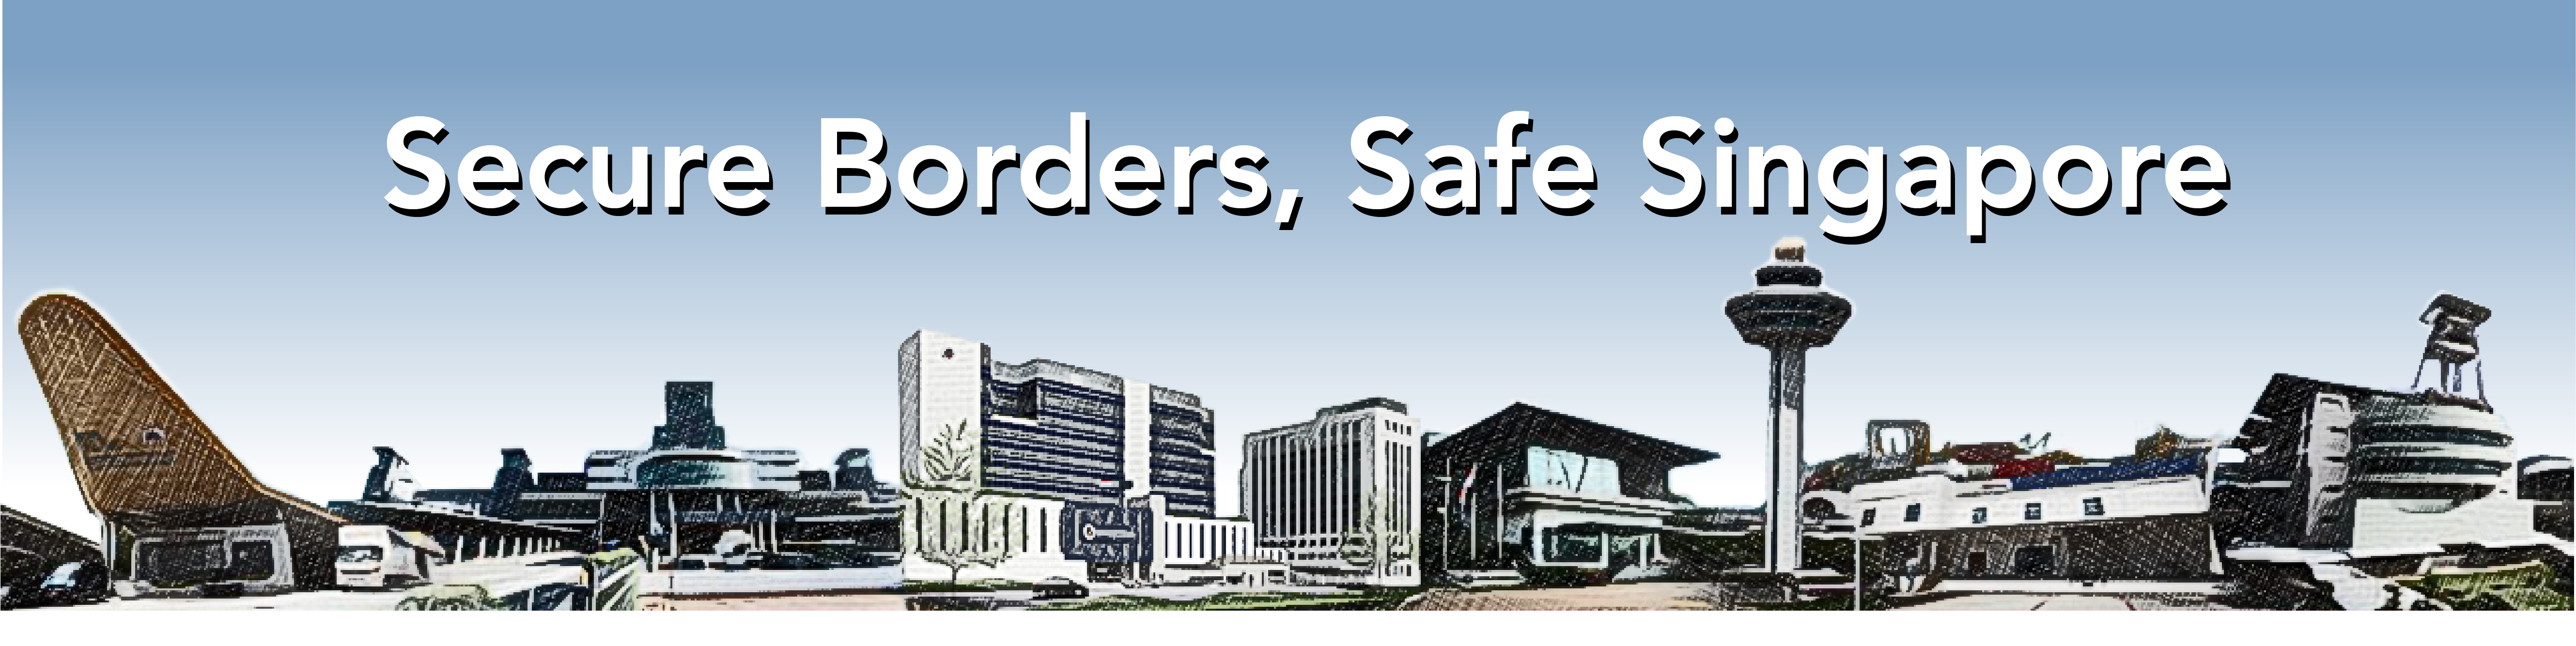 Image of Secure Borders, Safe Singapore